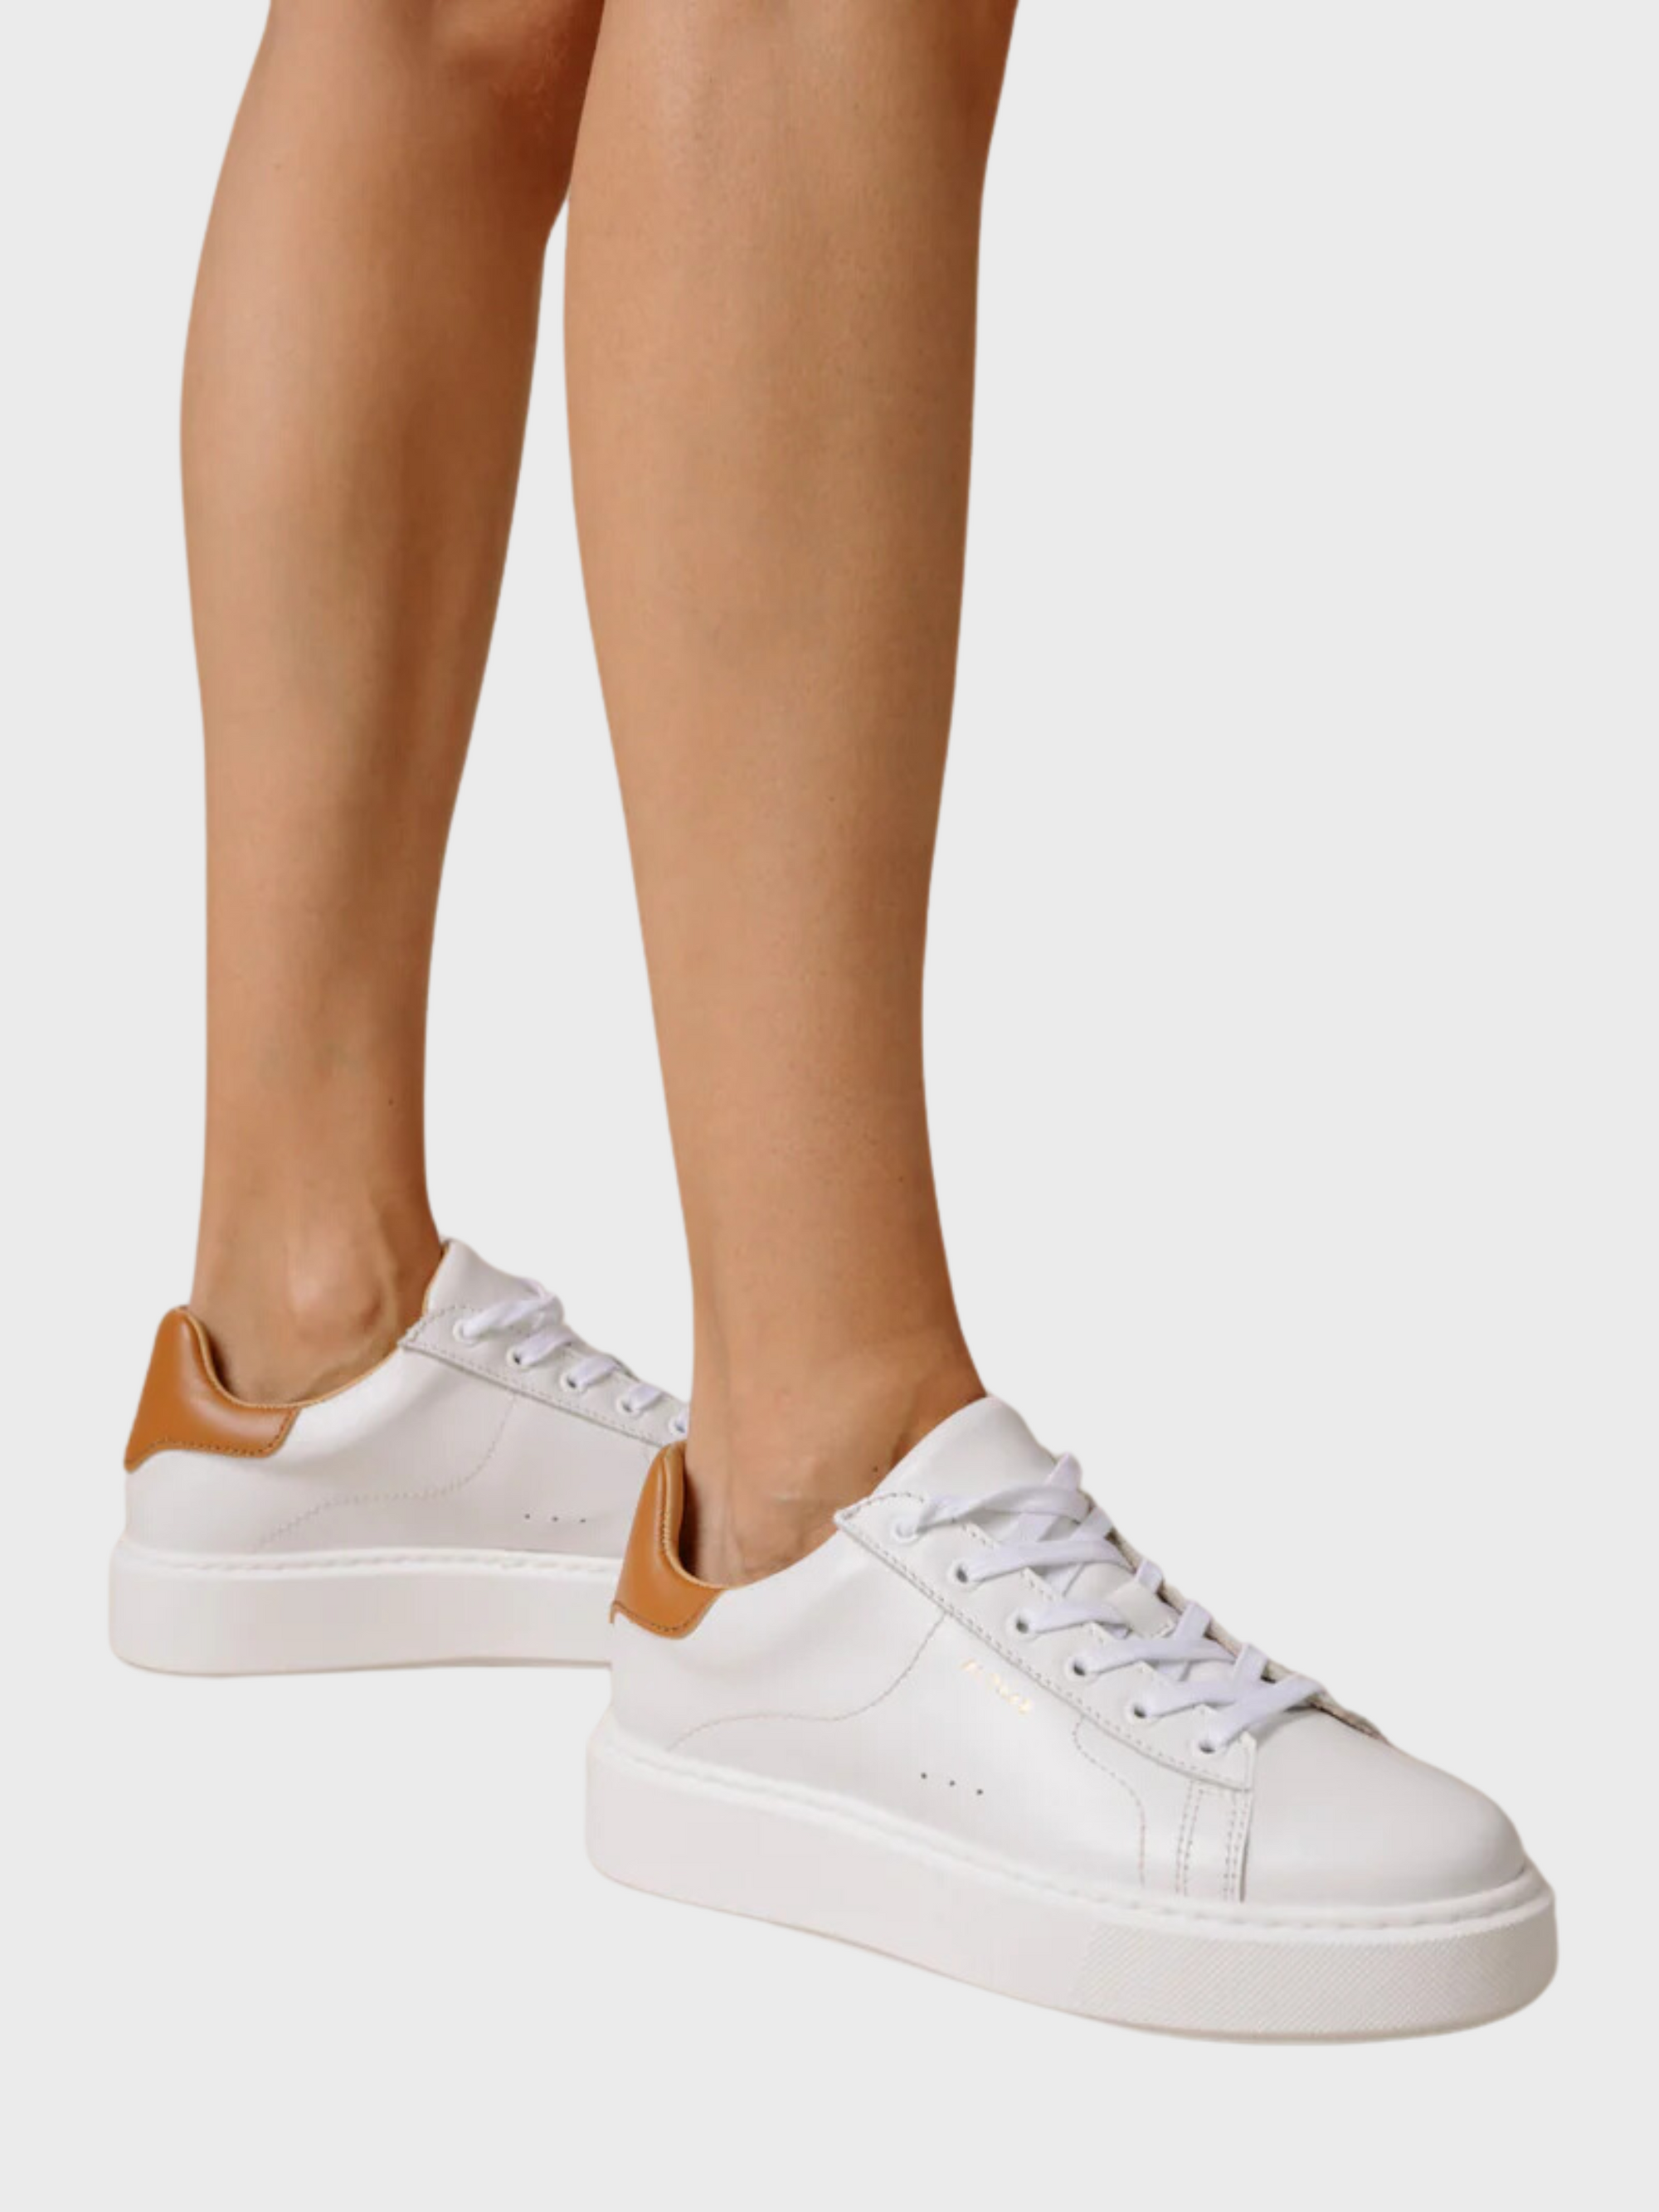 ALOHAS tb.65 Sneakers Bright White Tan